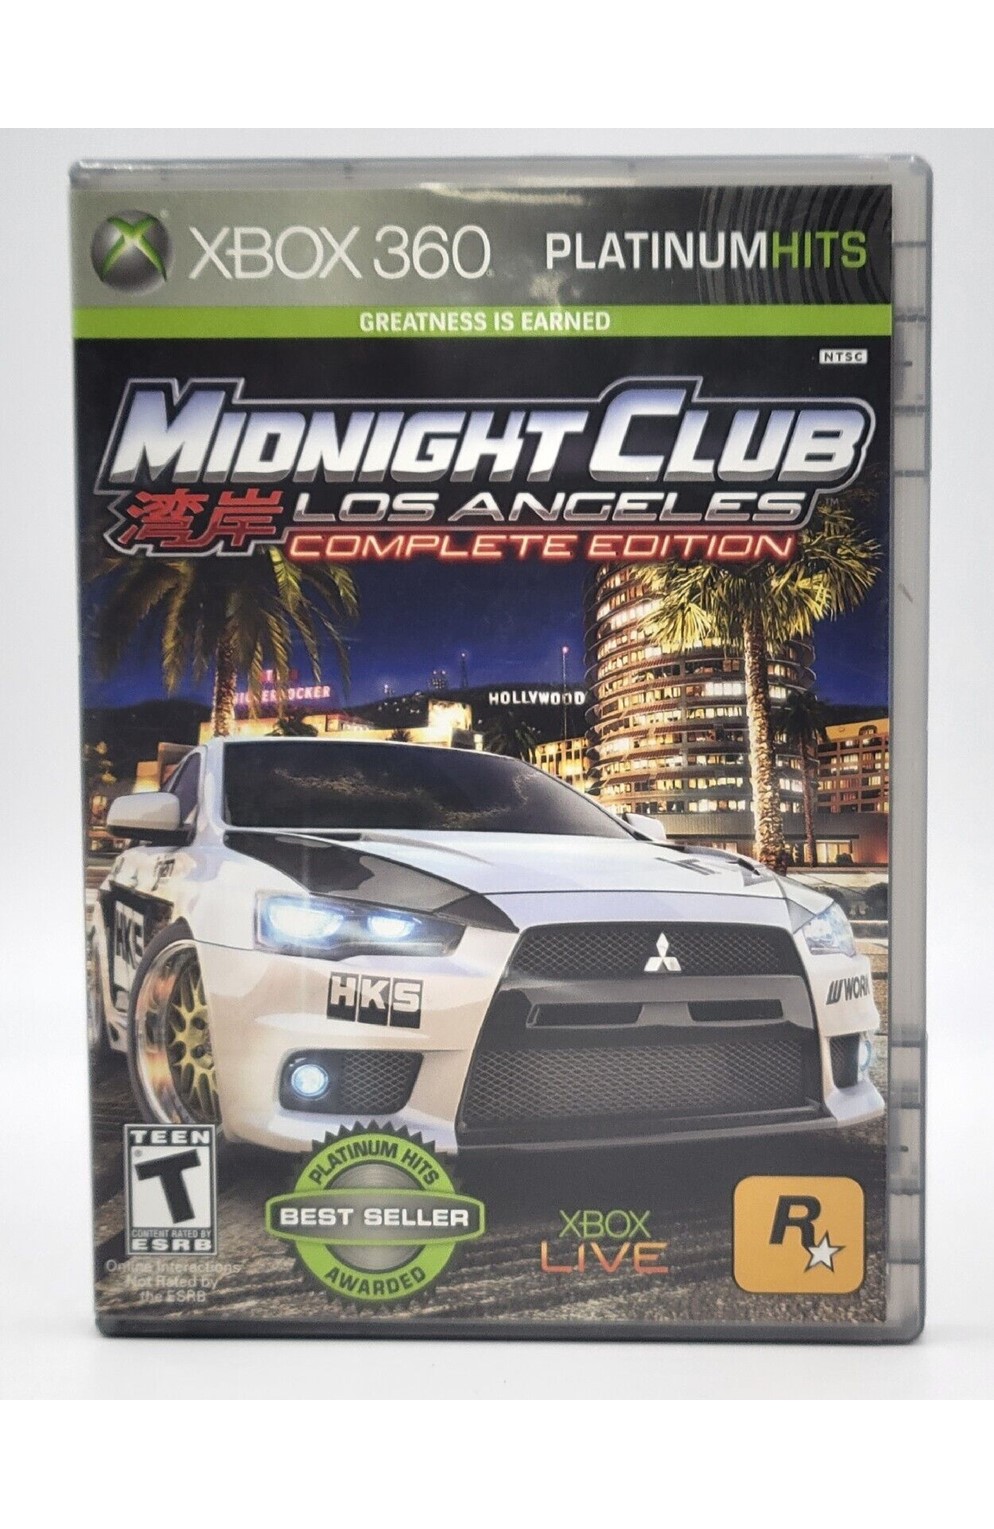 Xbox 360 Xb360 Midnight Club Los Angeles Complete Edition